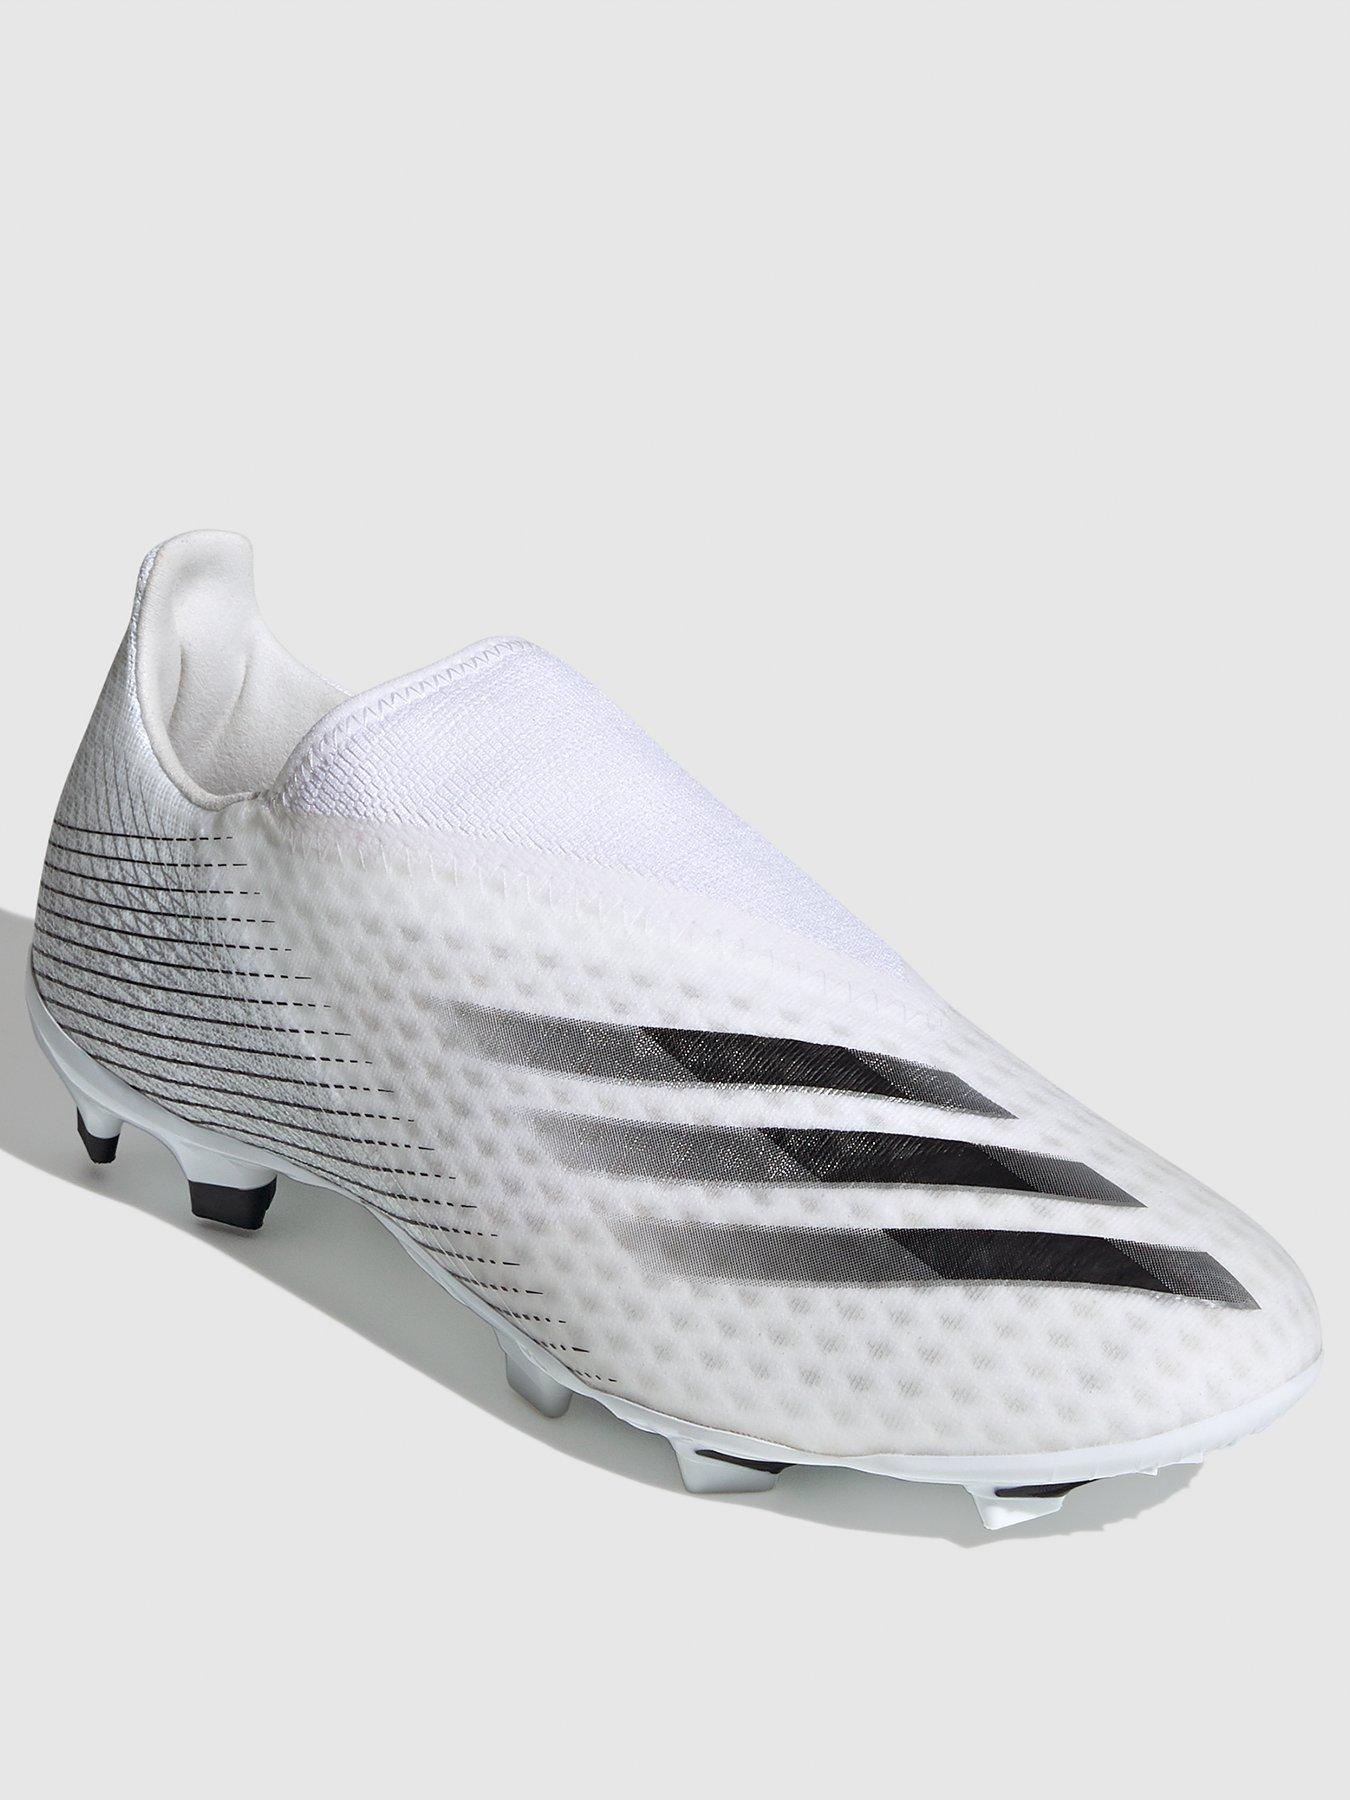 adidas white football boots